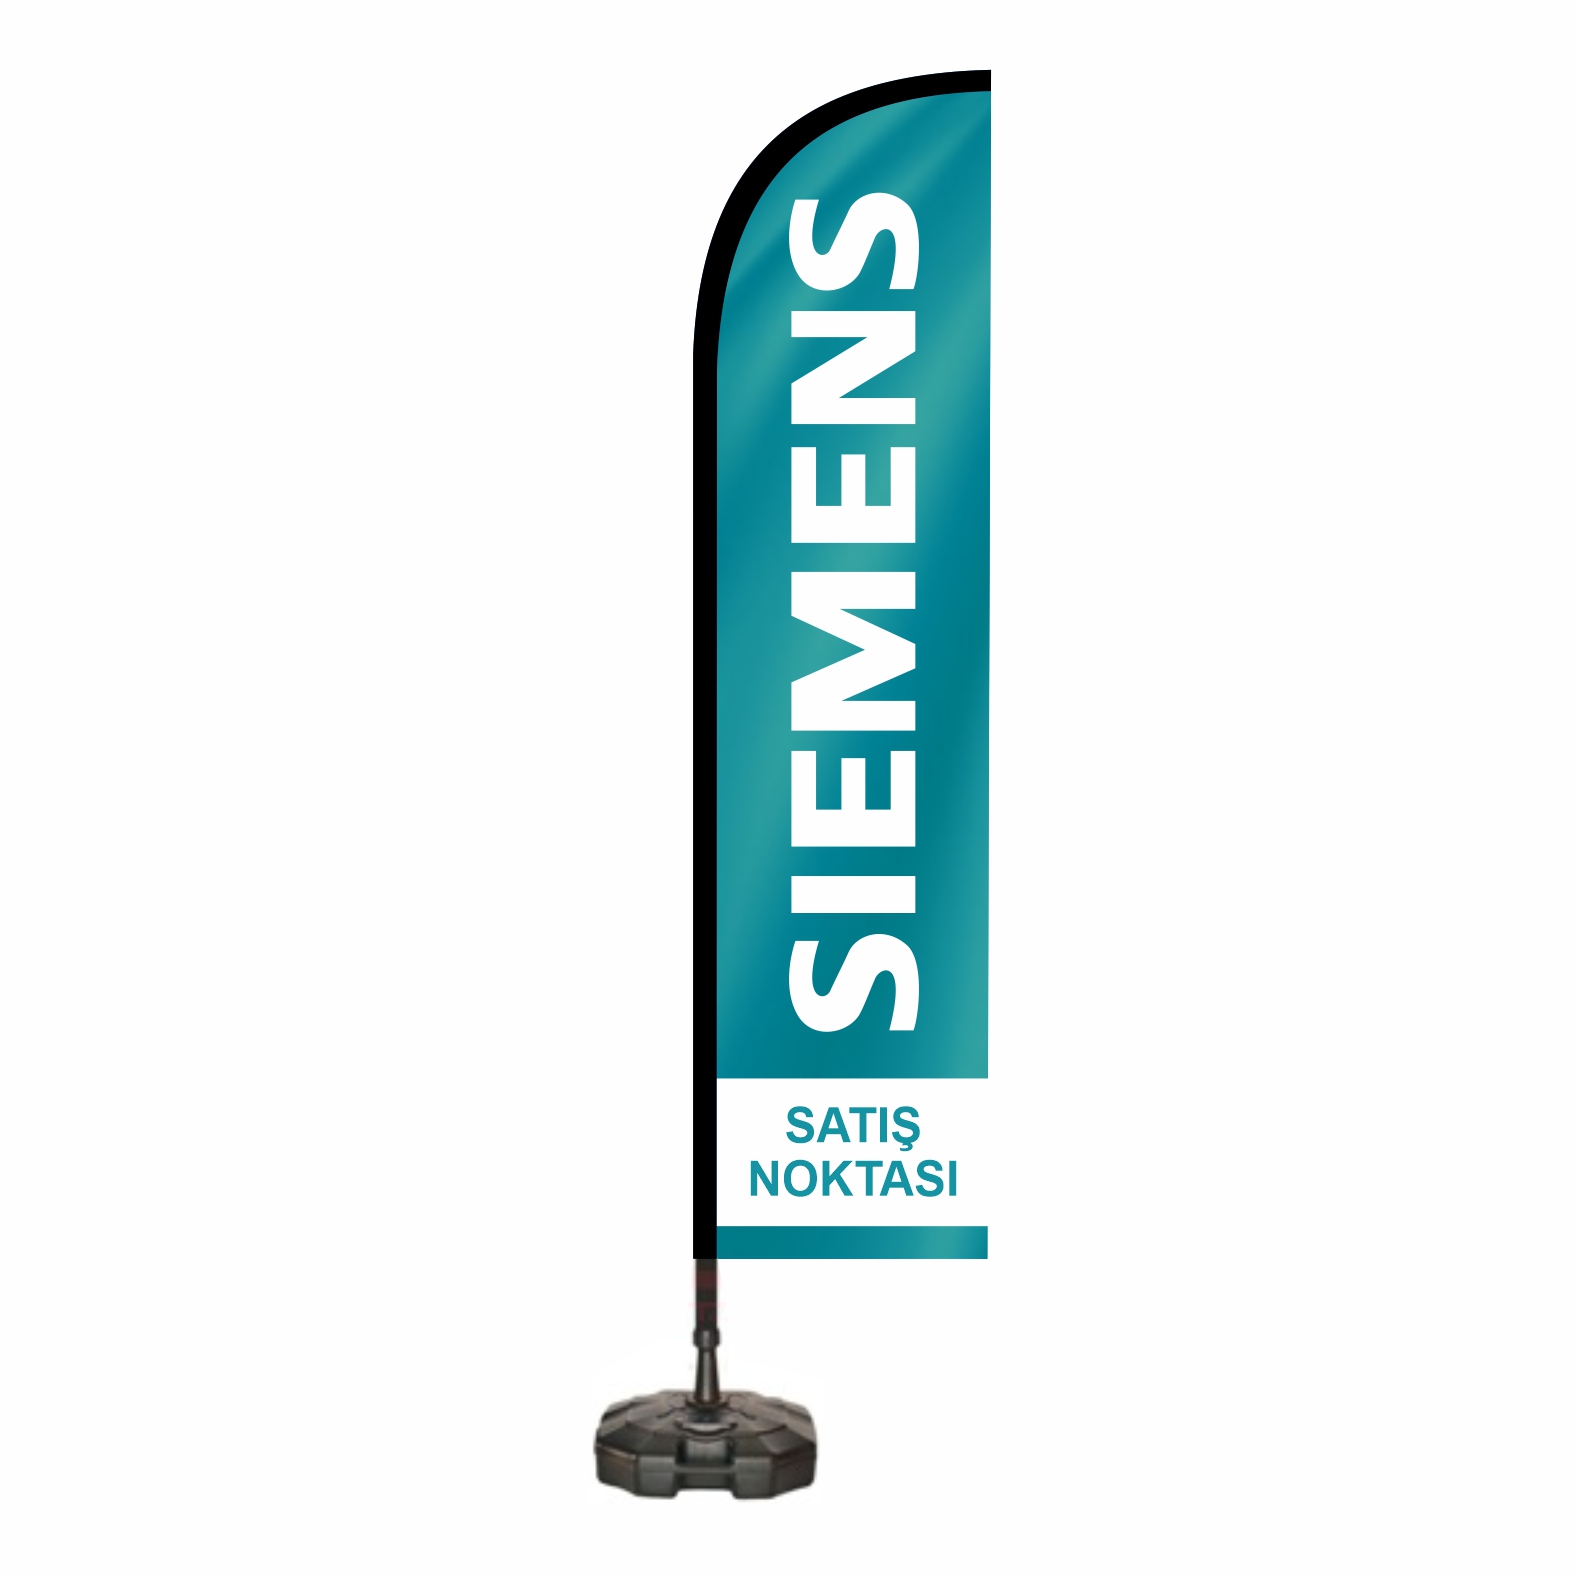 Siemens Yol Bayraklar